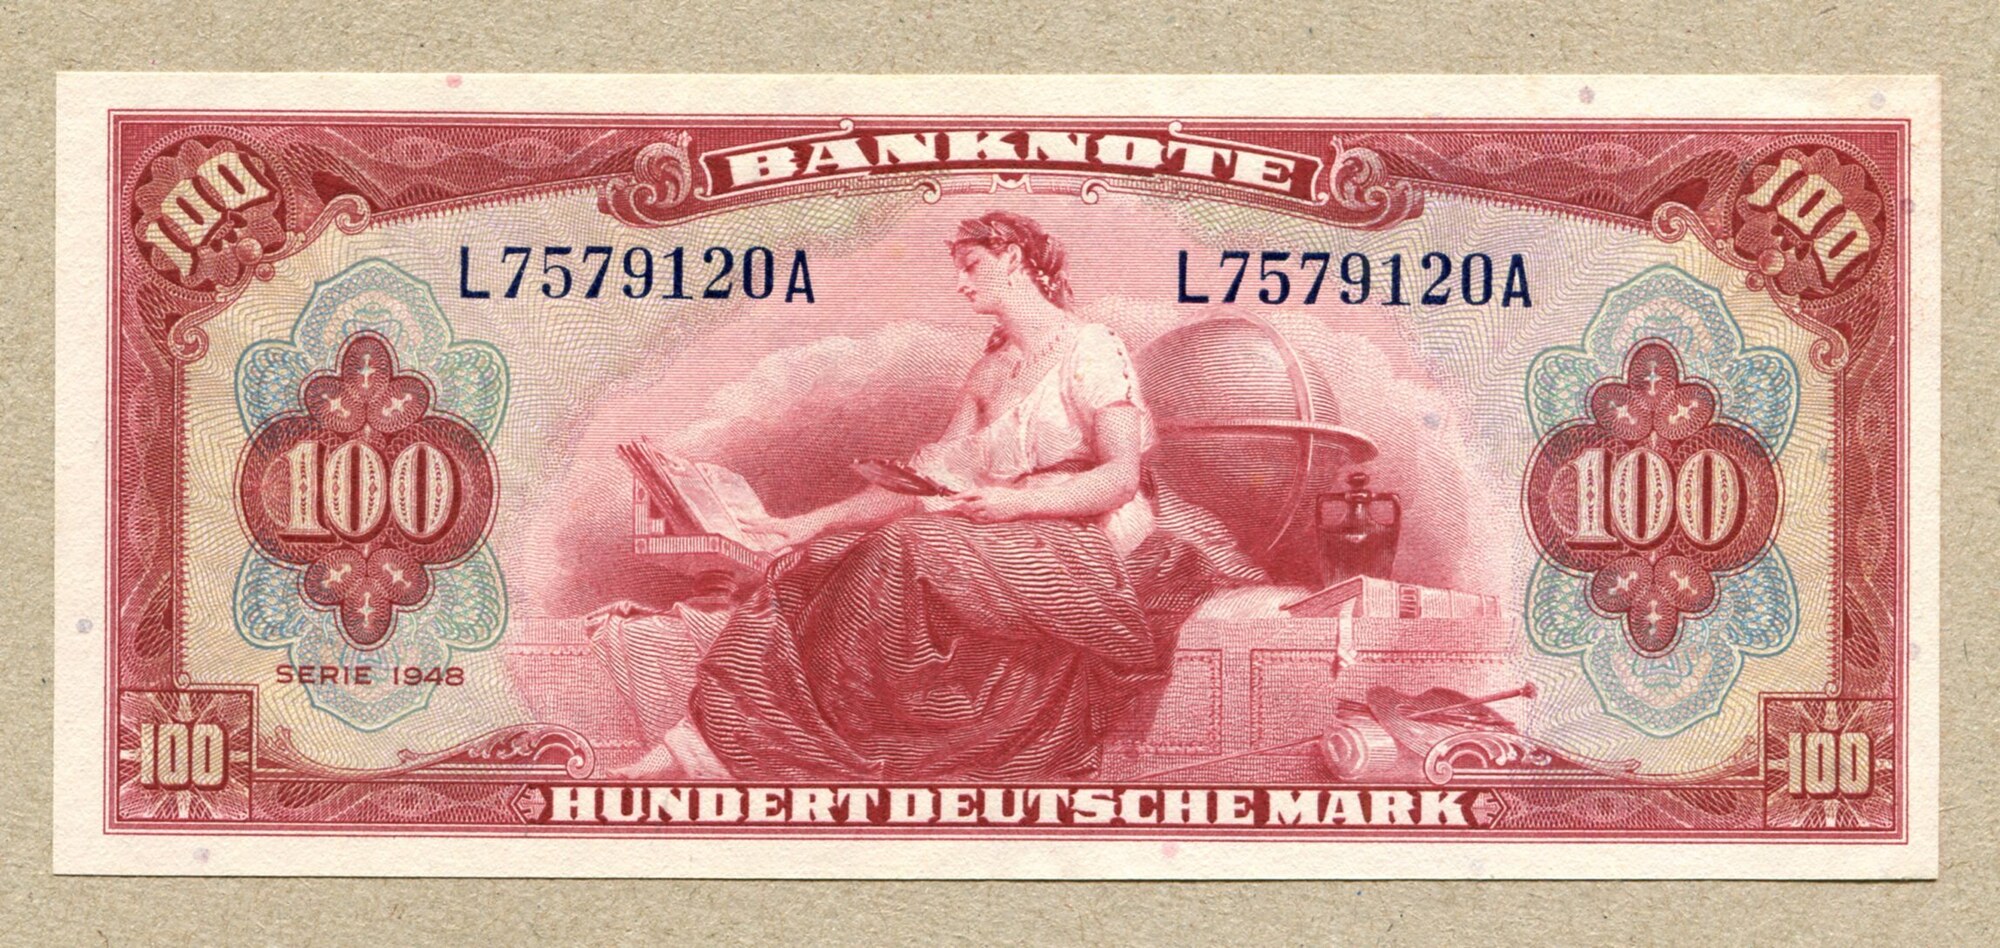 Deutsche mark. Марка ФРГ 1948. Валюта Германии марка. Немецкая марка банкноты. Немецкие марки деньги.